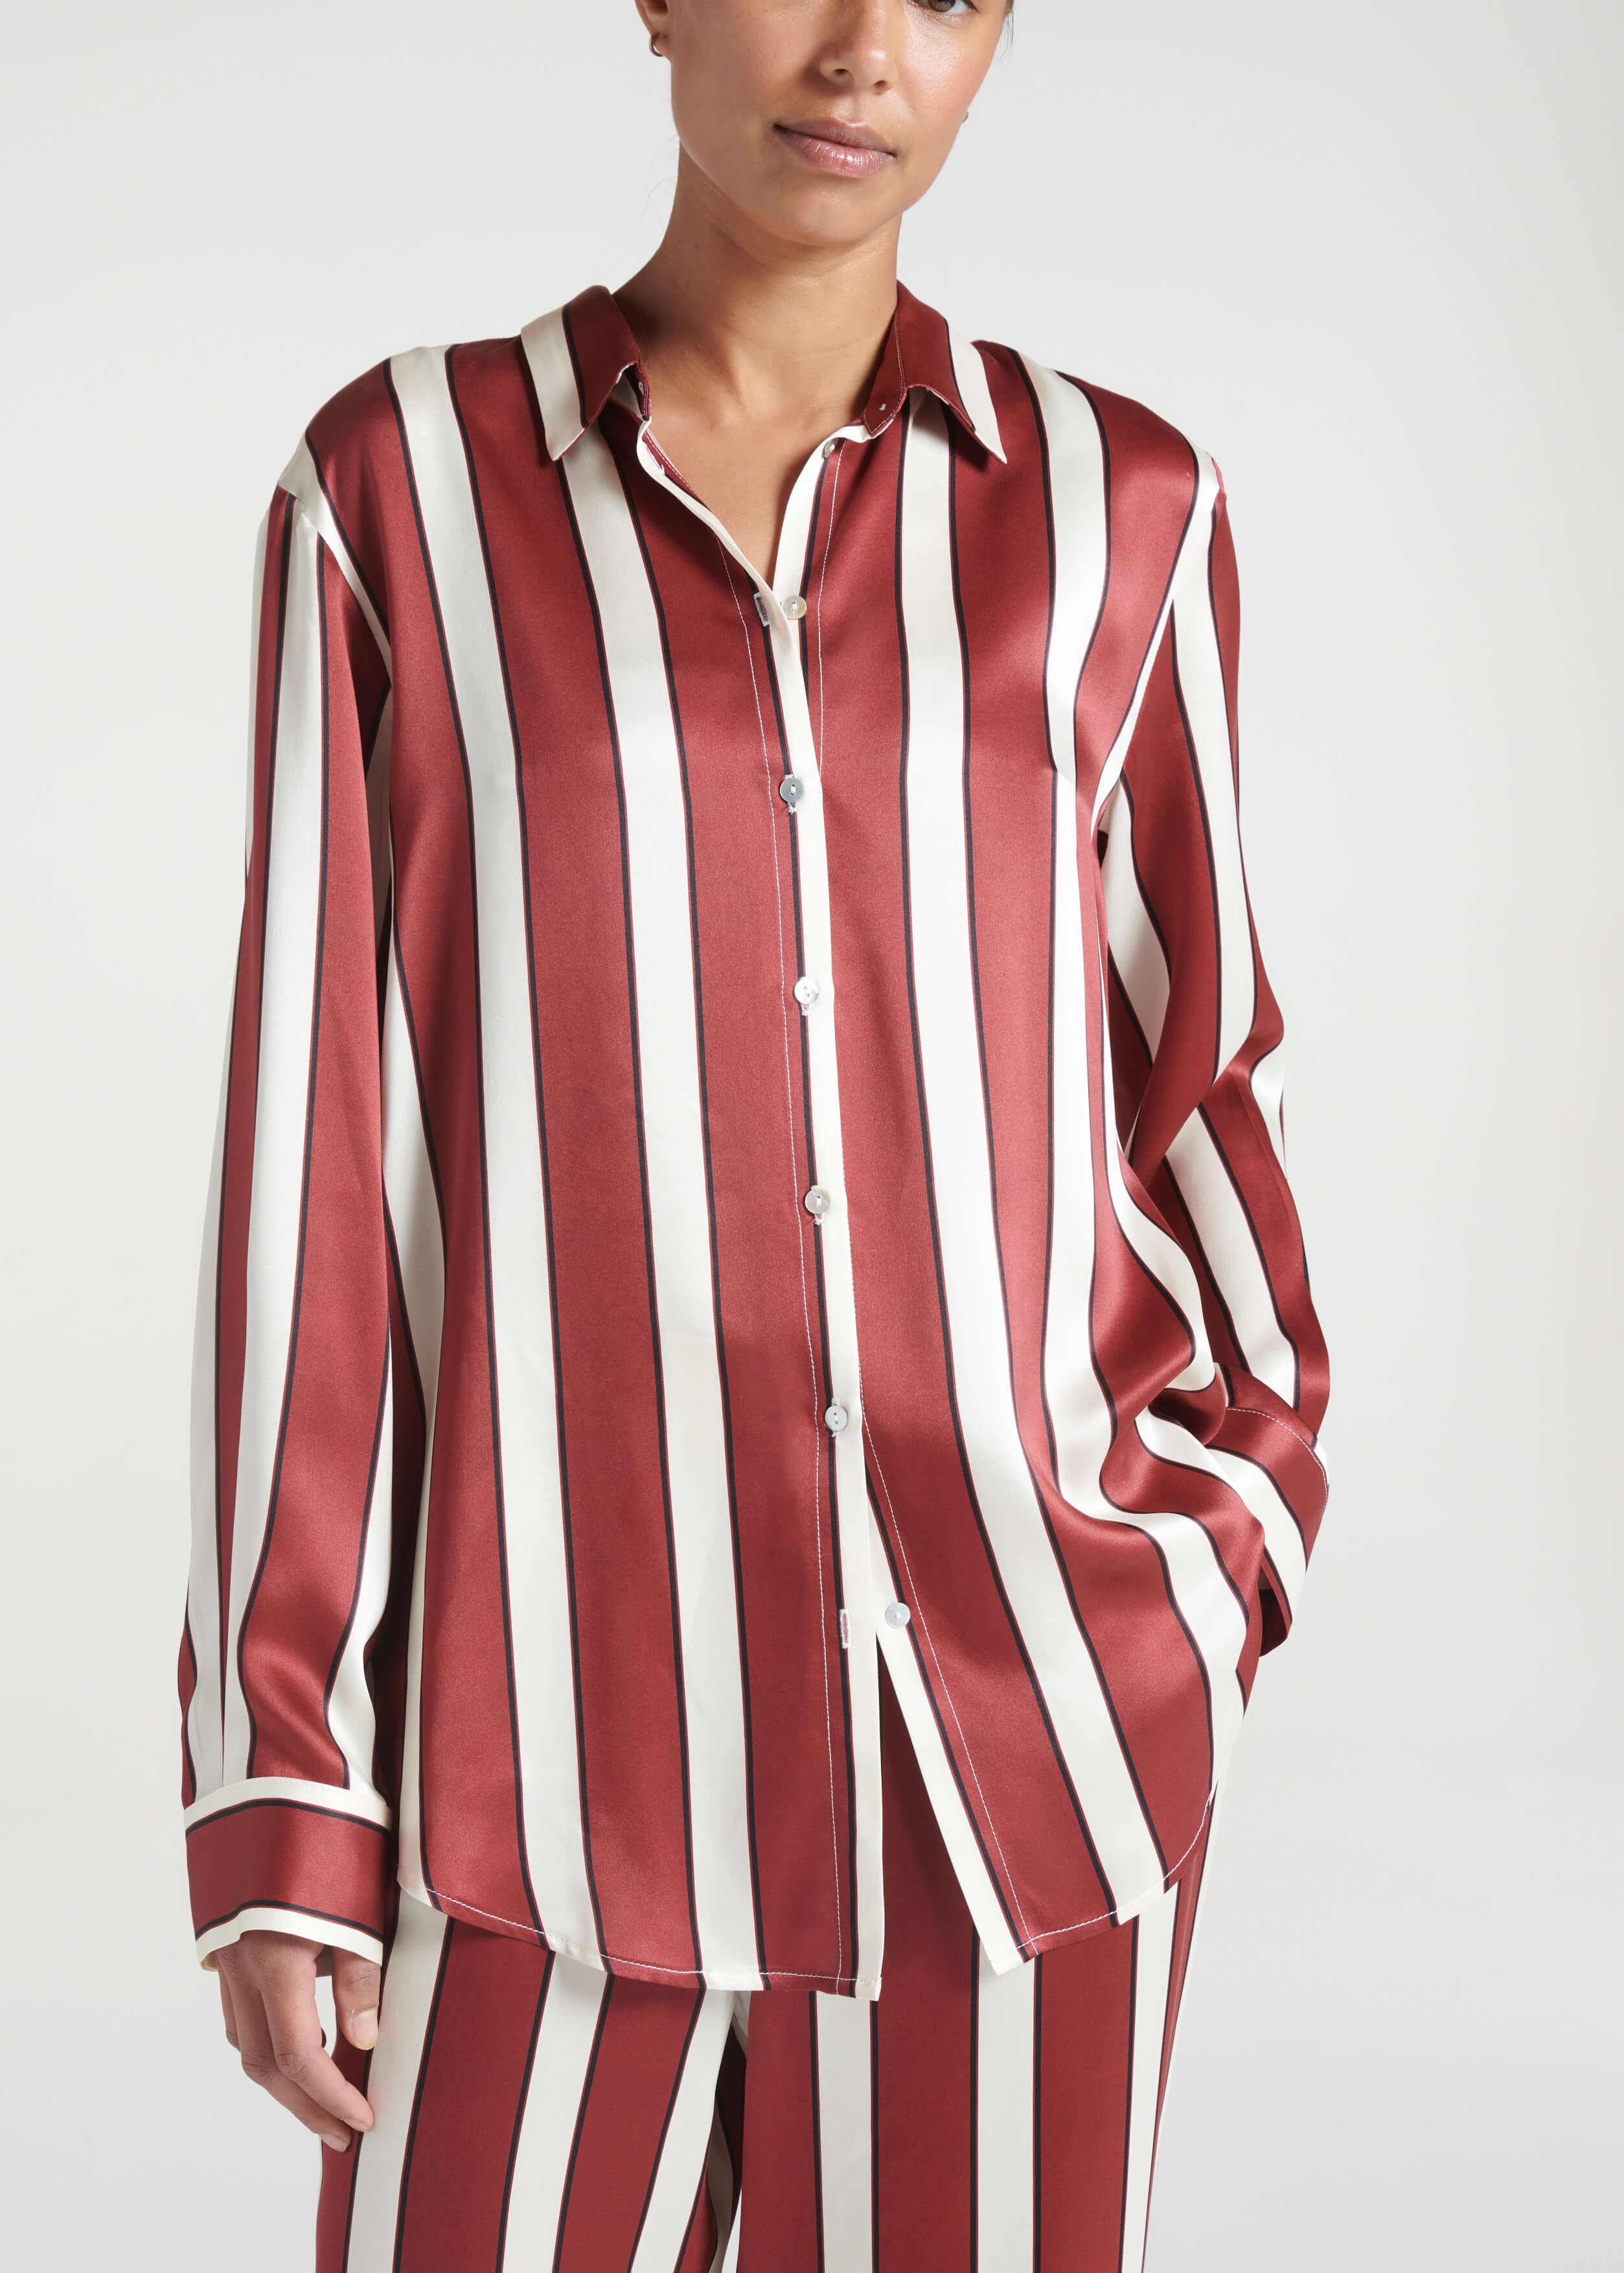 Shop Luxurious Silk & Linen Ladies Shirts | Asceno Clothing